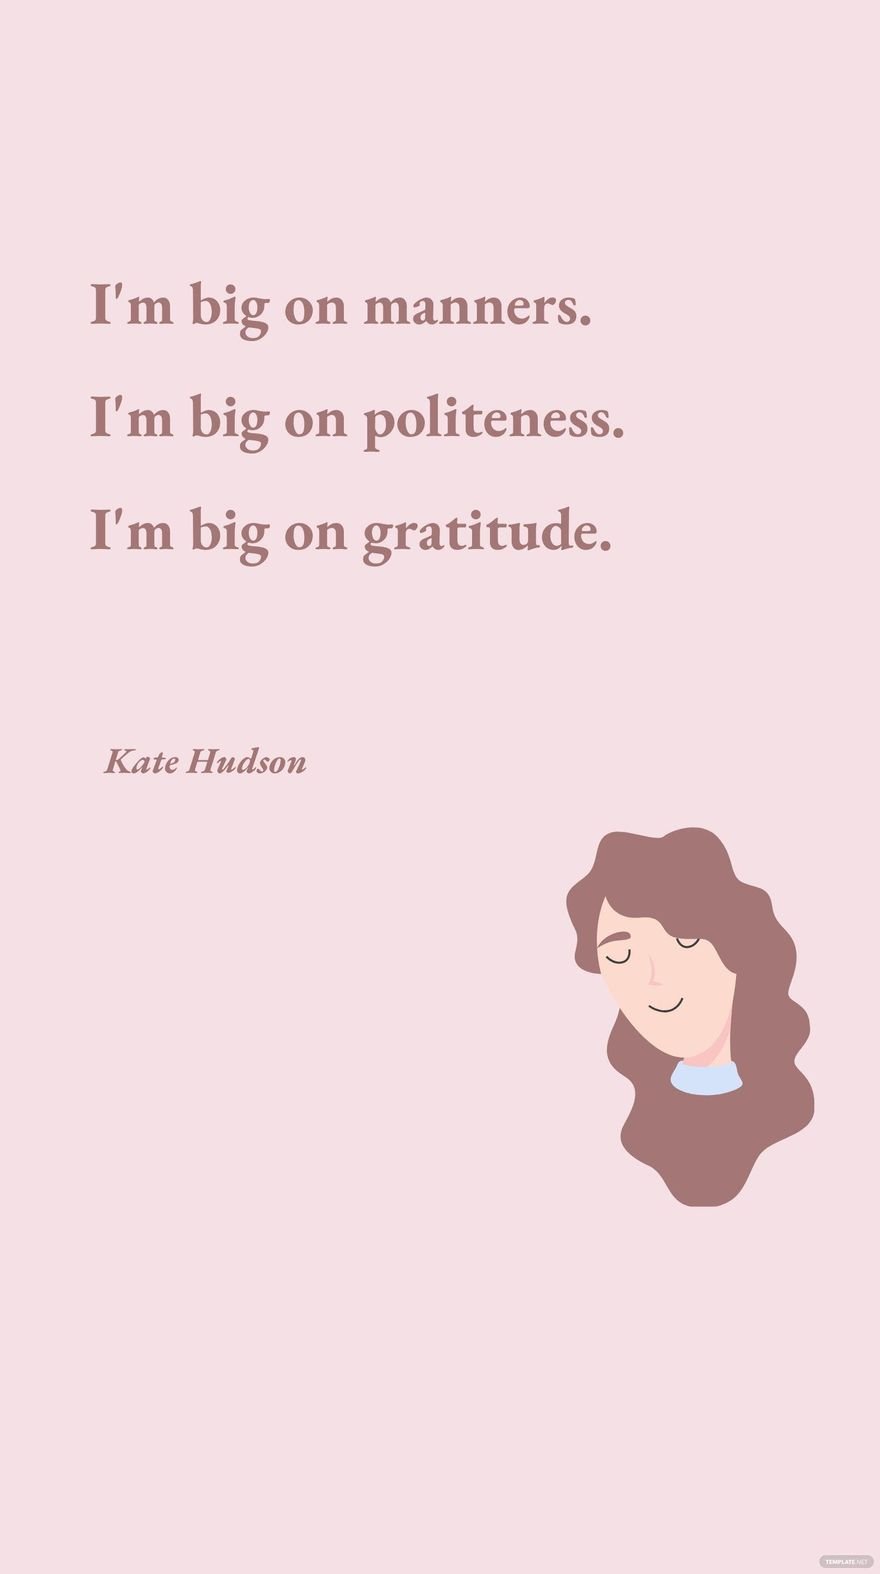 Kate Hudson - I'm big on manners. I'm big on politeness. I'm big on gratitude.